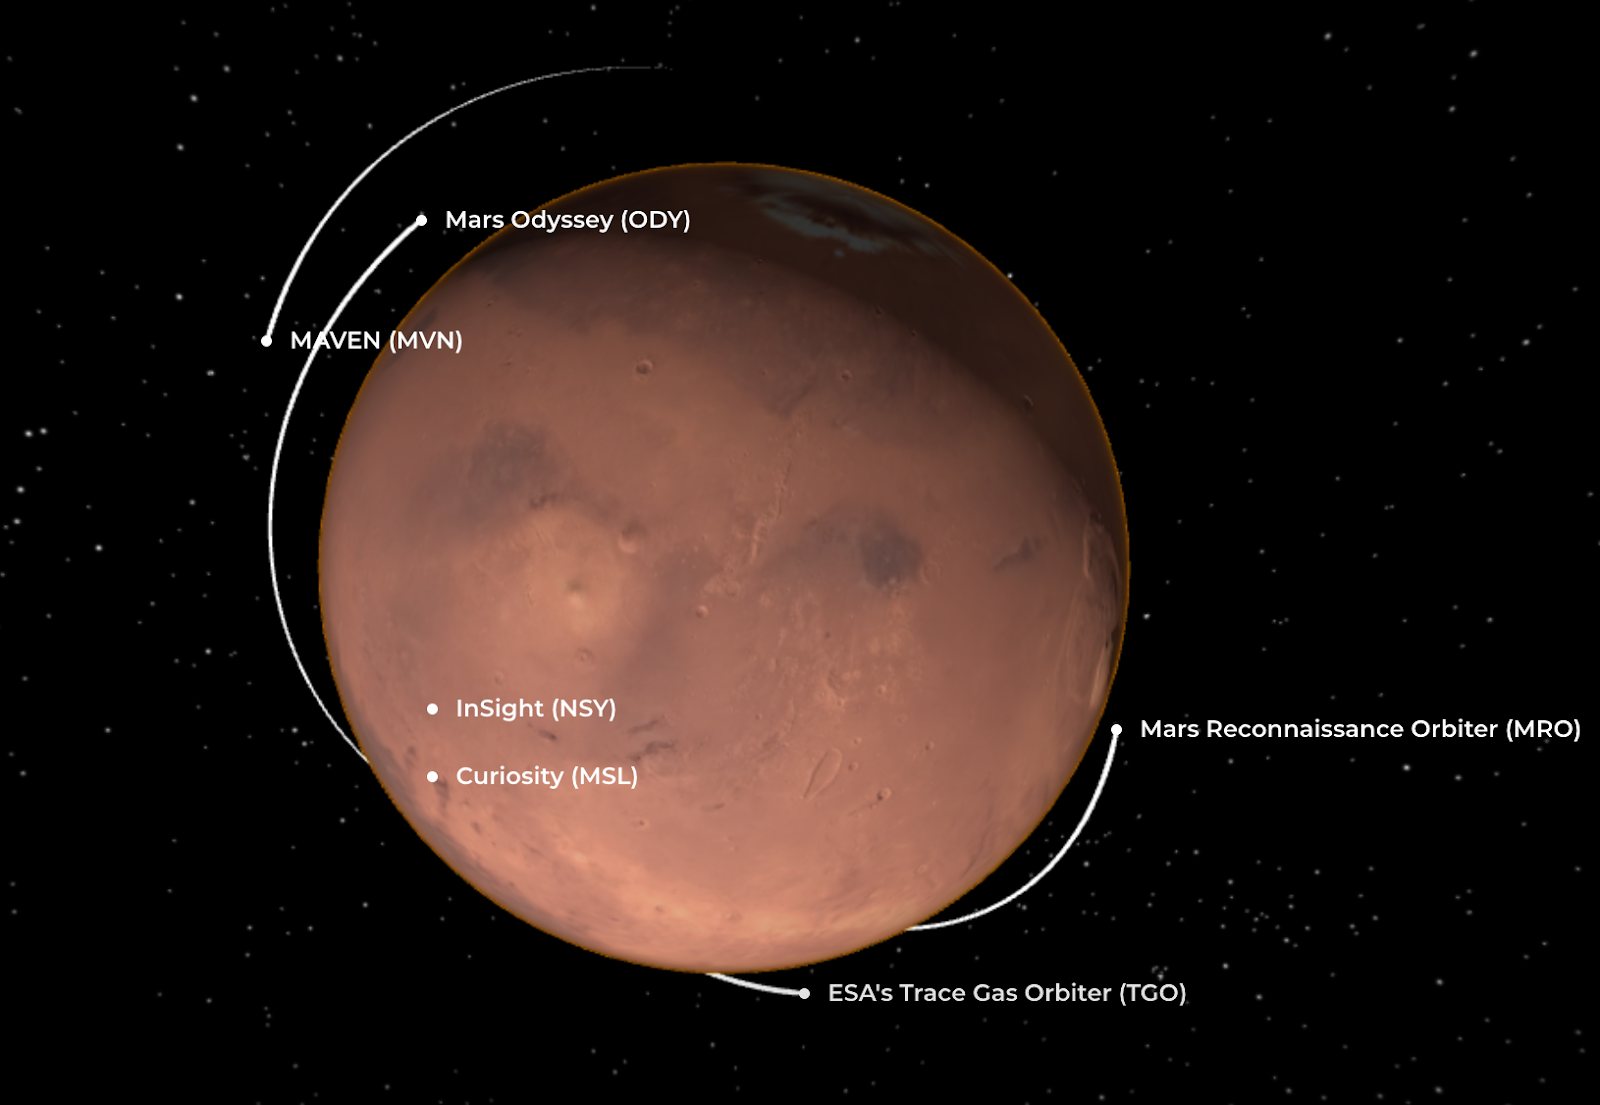 Image of spacecraft orbiters revolving around Mars